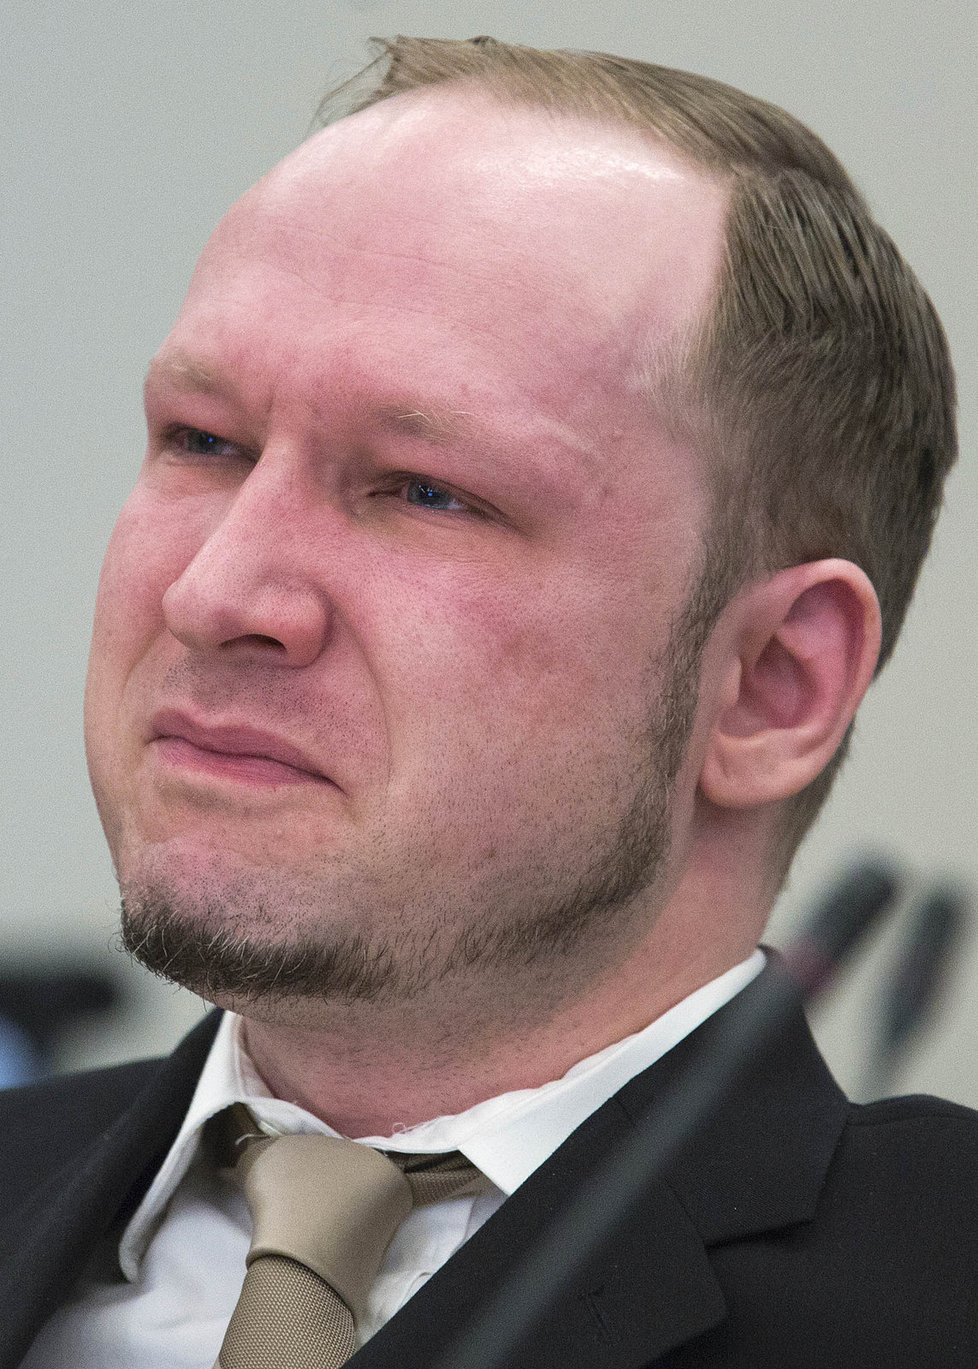 Breivika dojalo jeho vlastní propagandistické video